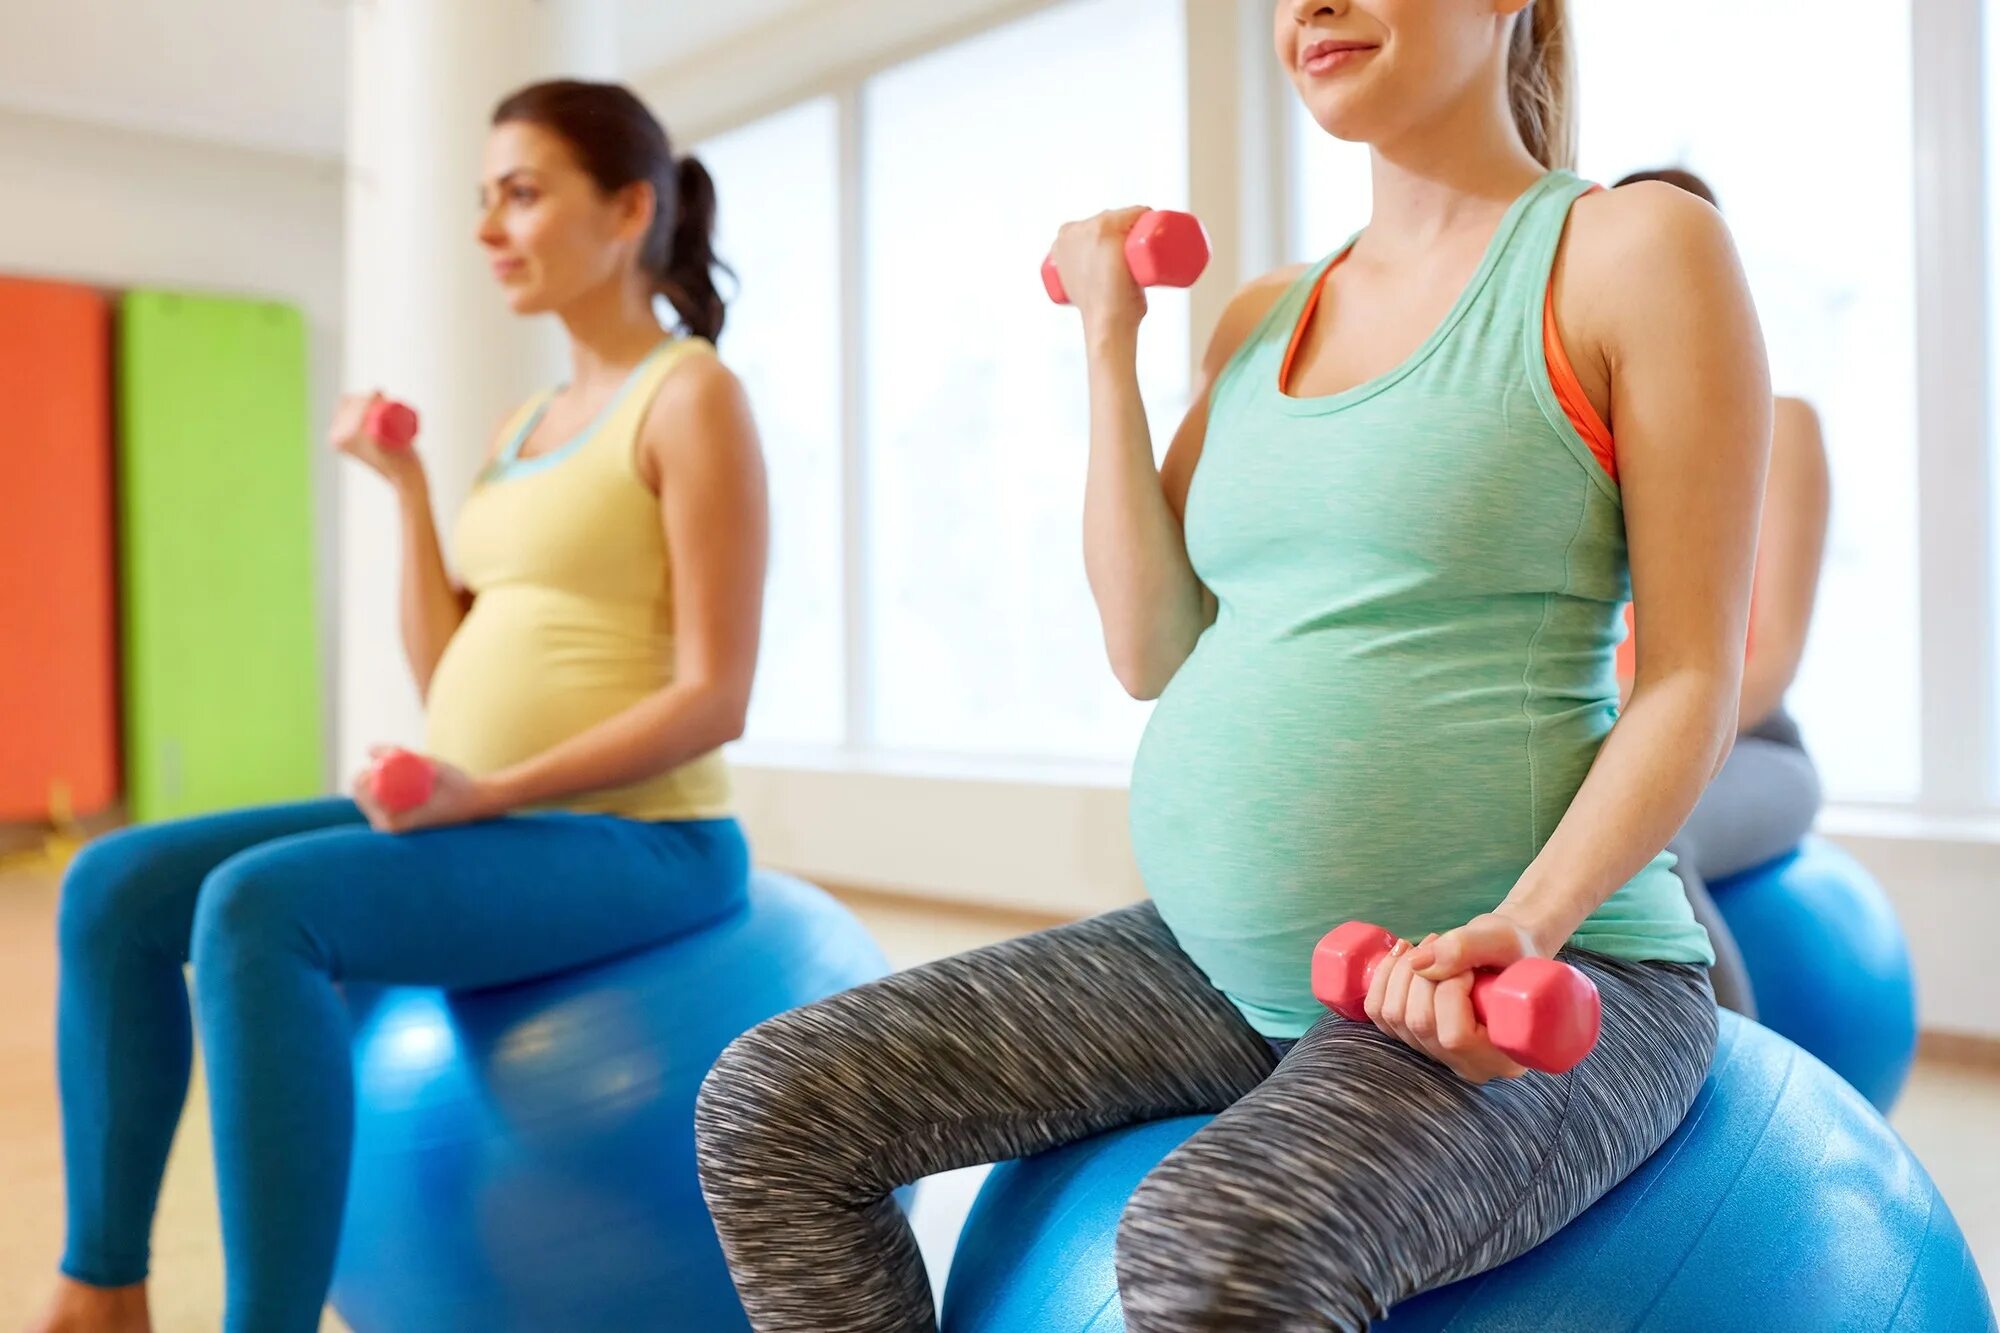 During 30. Занятия для беременных. Фитнес для беременных. Физическая активность беременных. Занятия фитнесом для беременных.